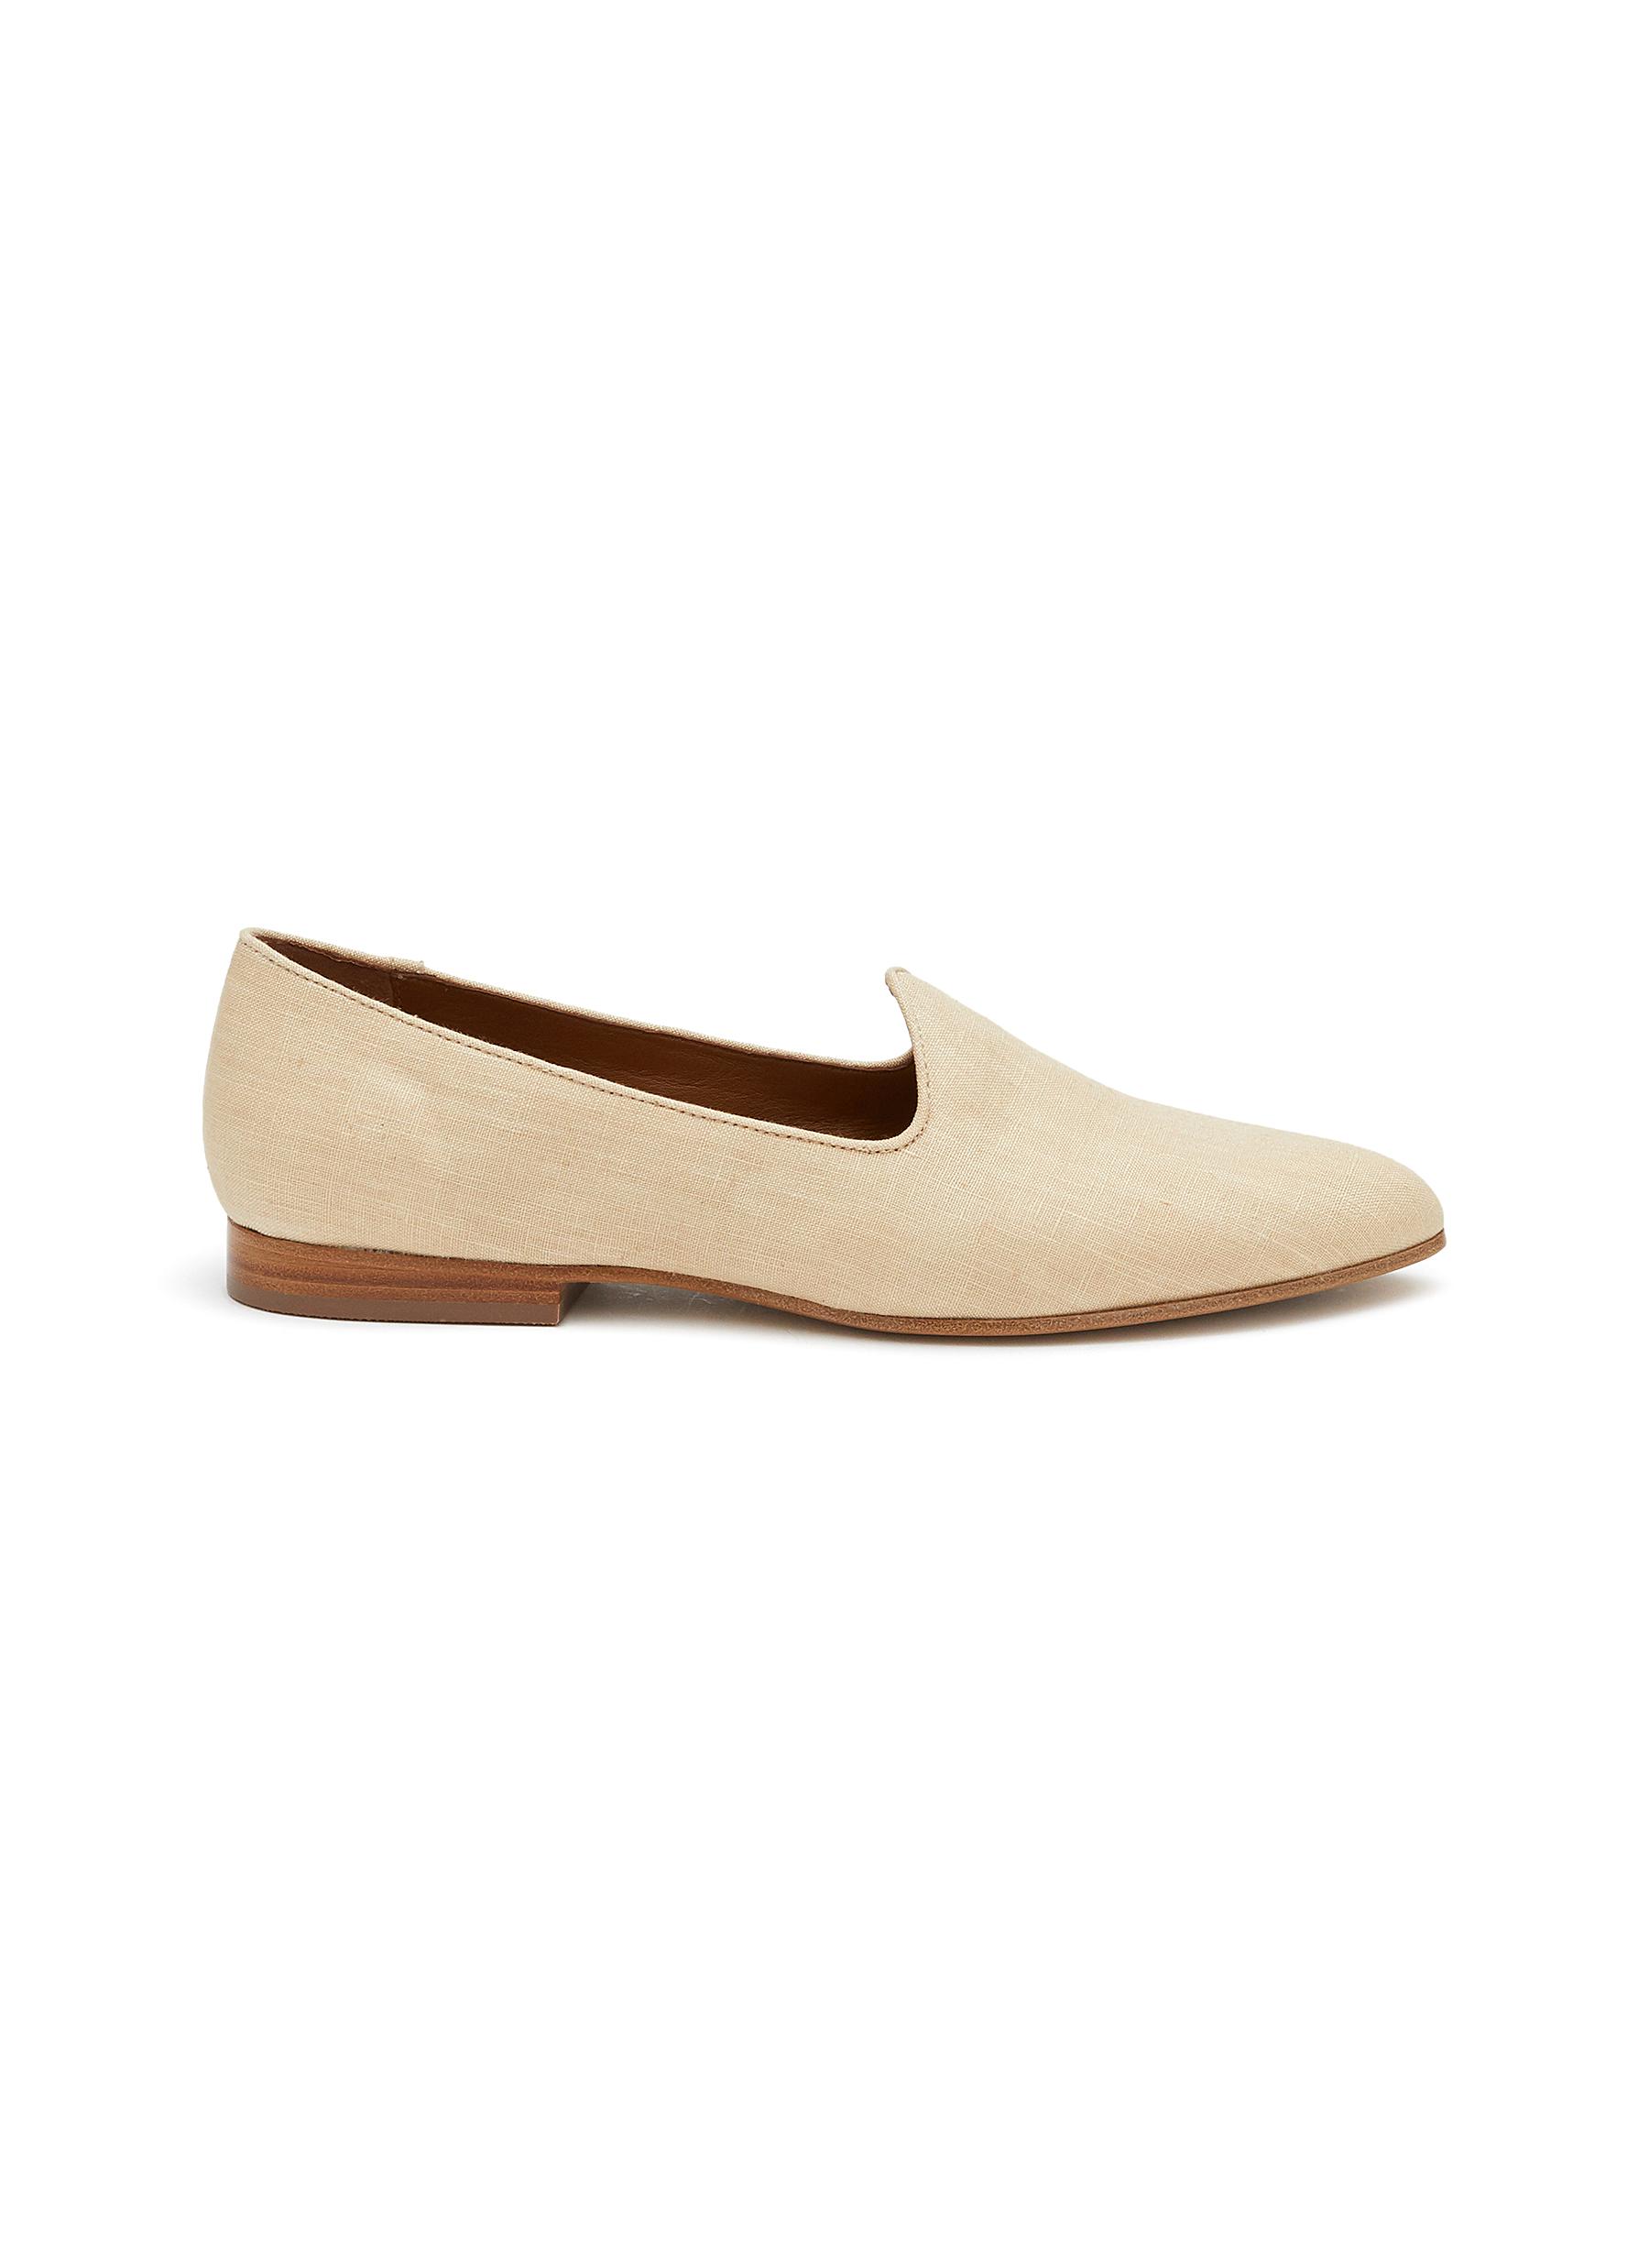 LE MONDE BERYL ‘Venetian' Almond Toe Linen Loafers